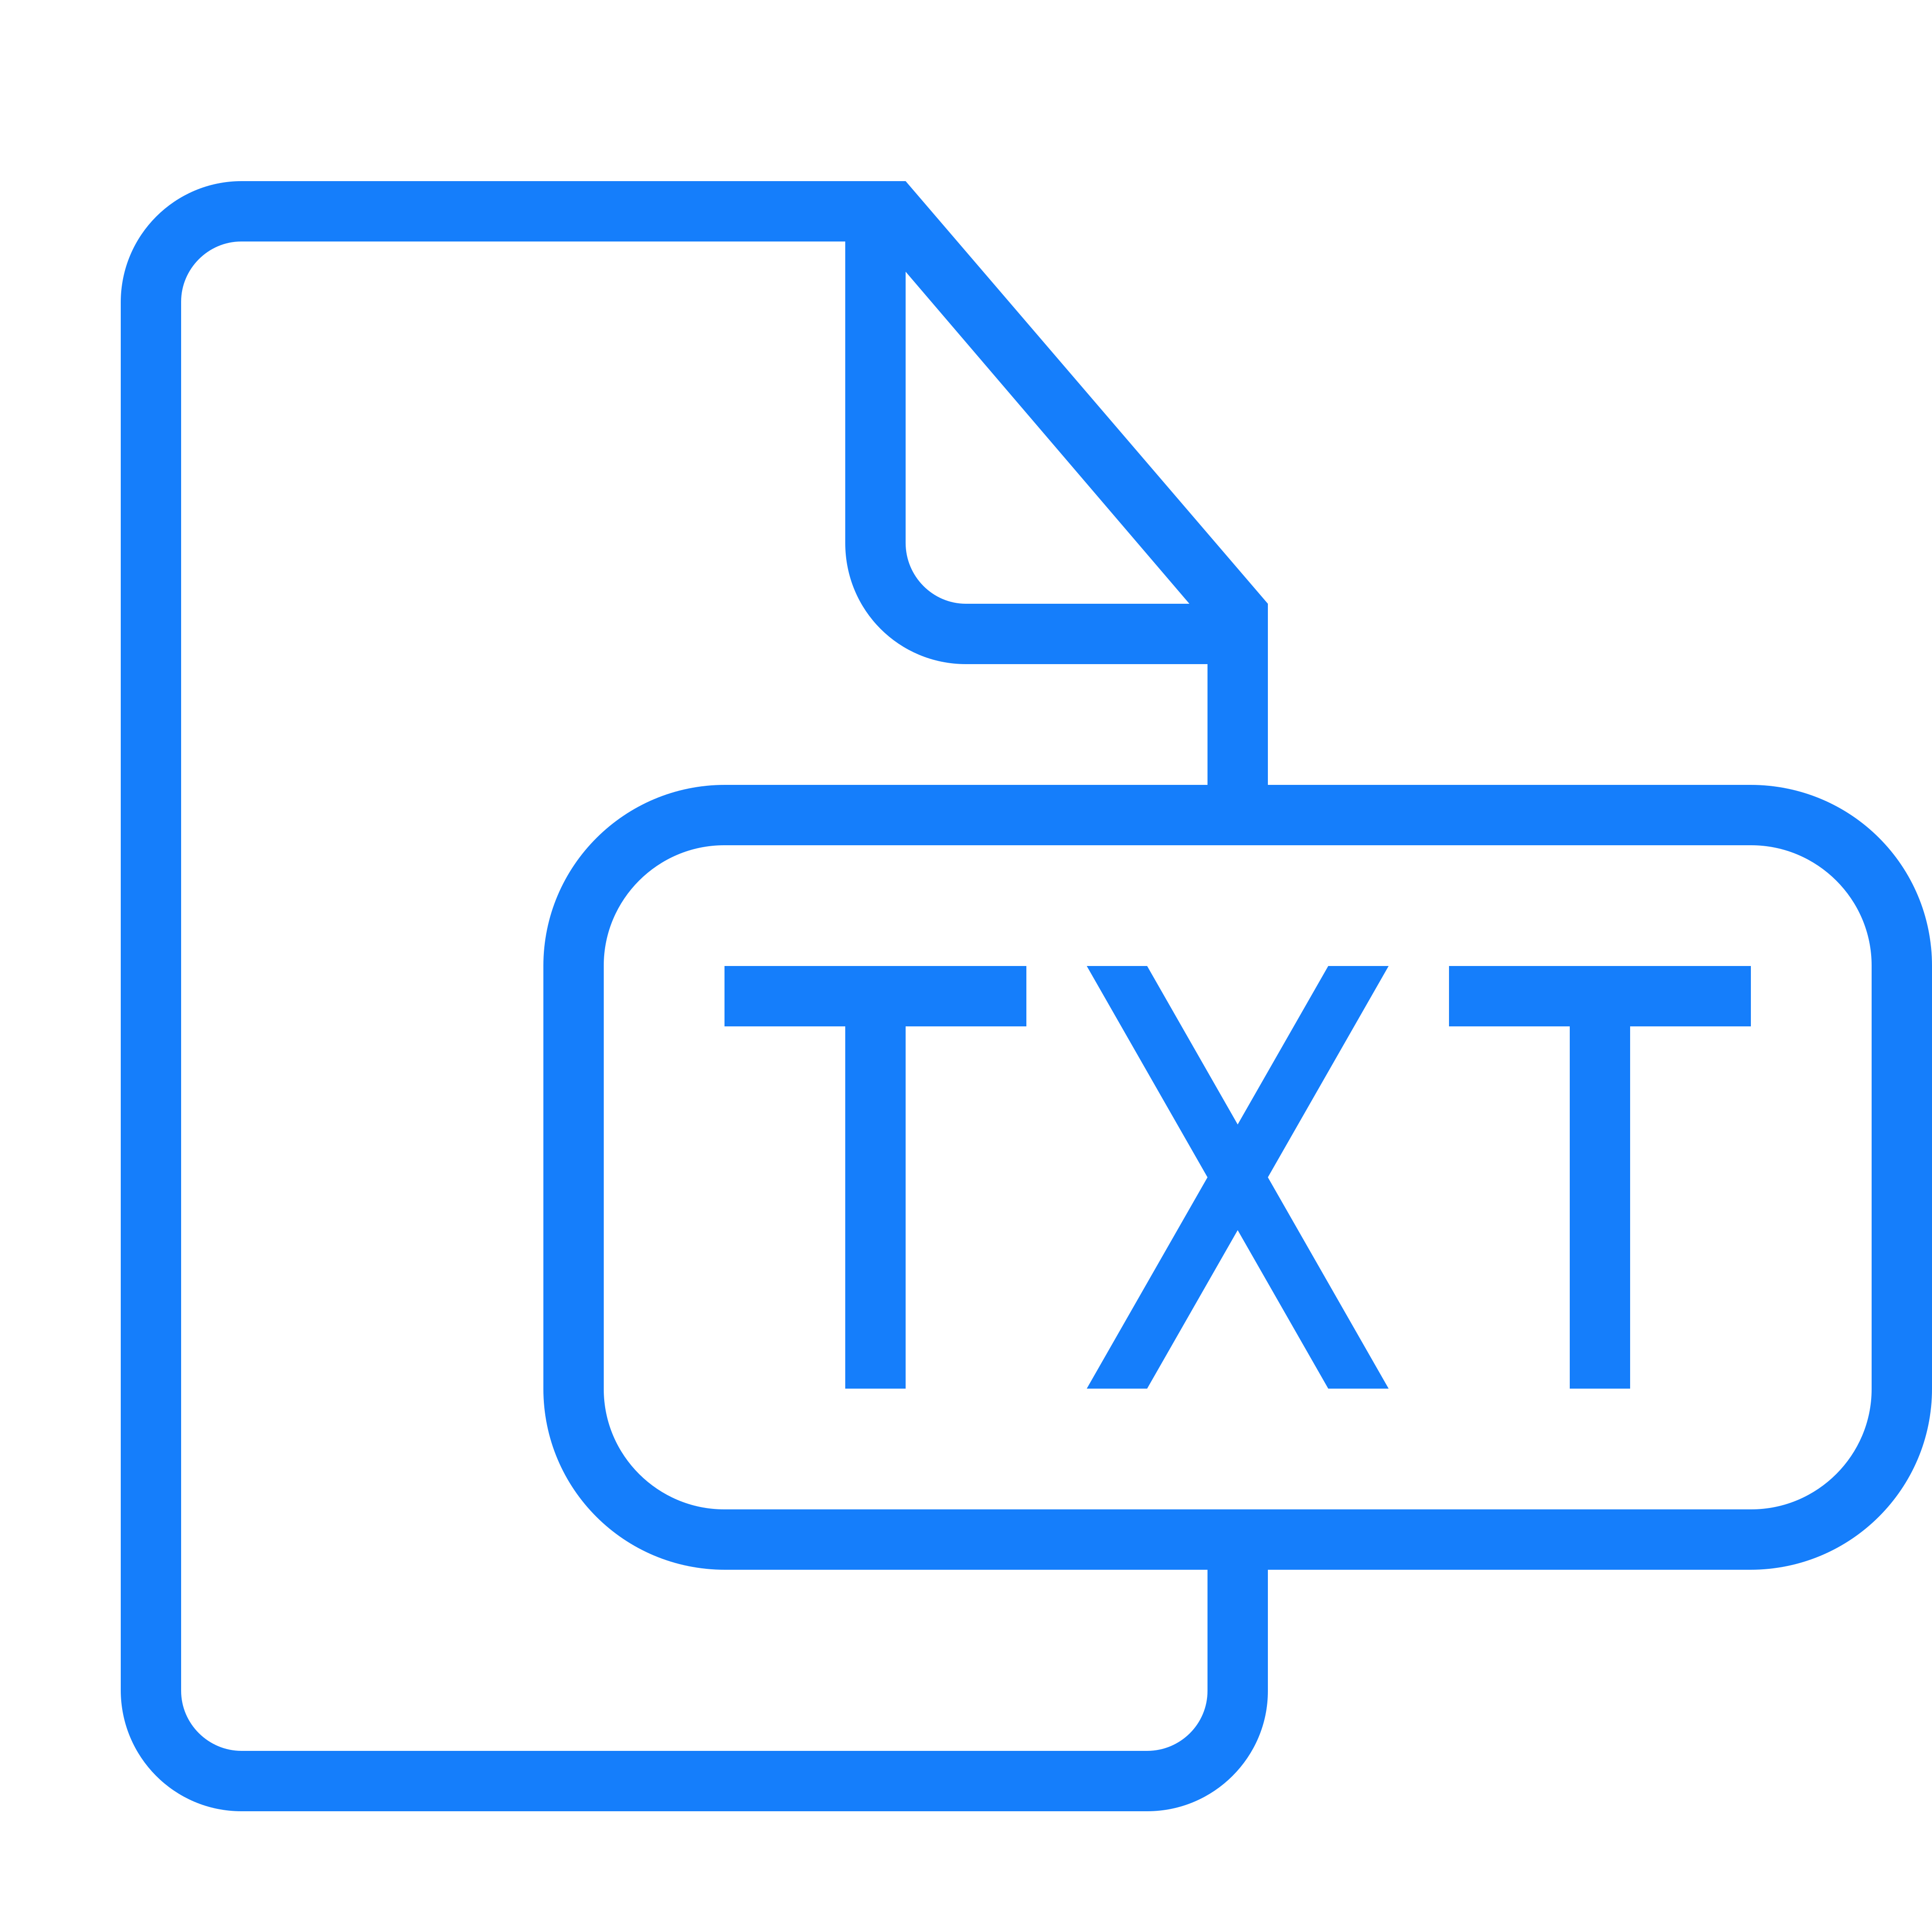 Иконка txt. Тхт символ. Txt Формат. Значок XML. Знак txt